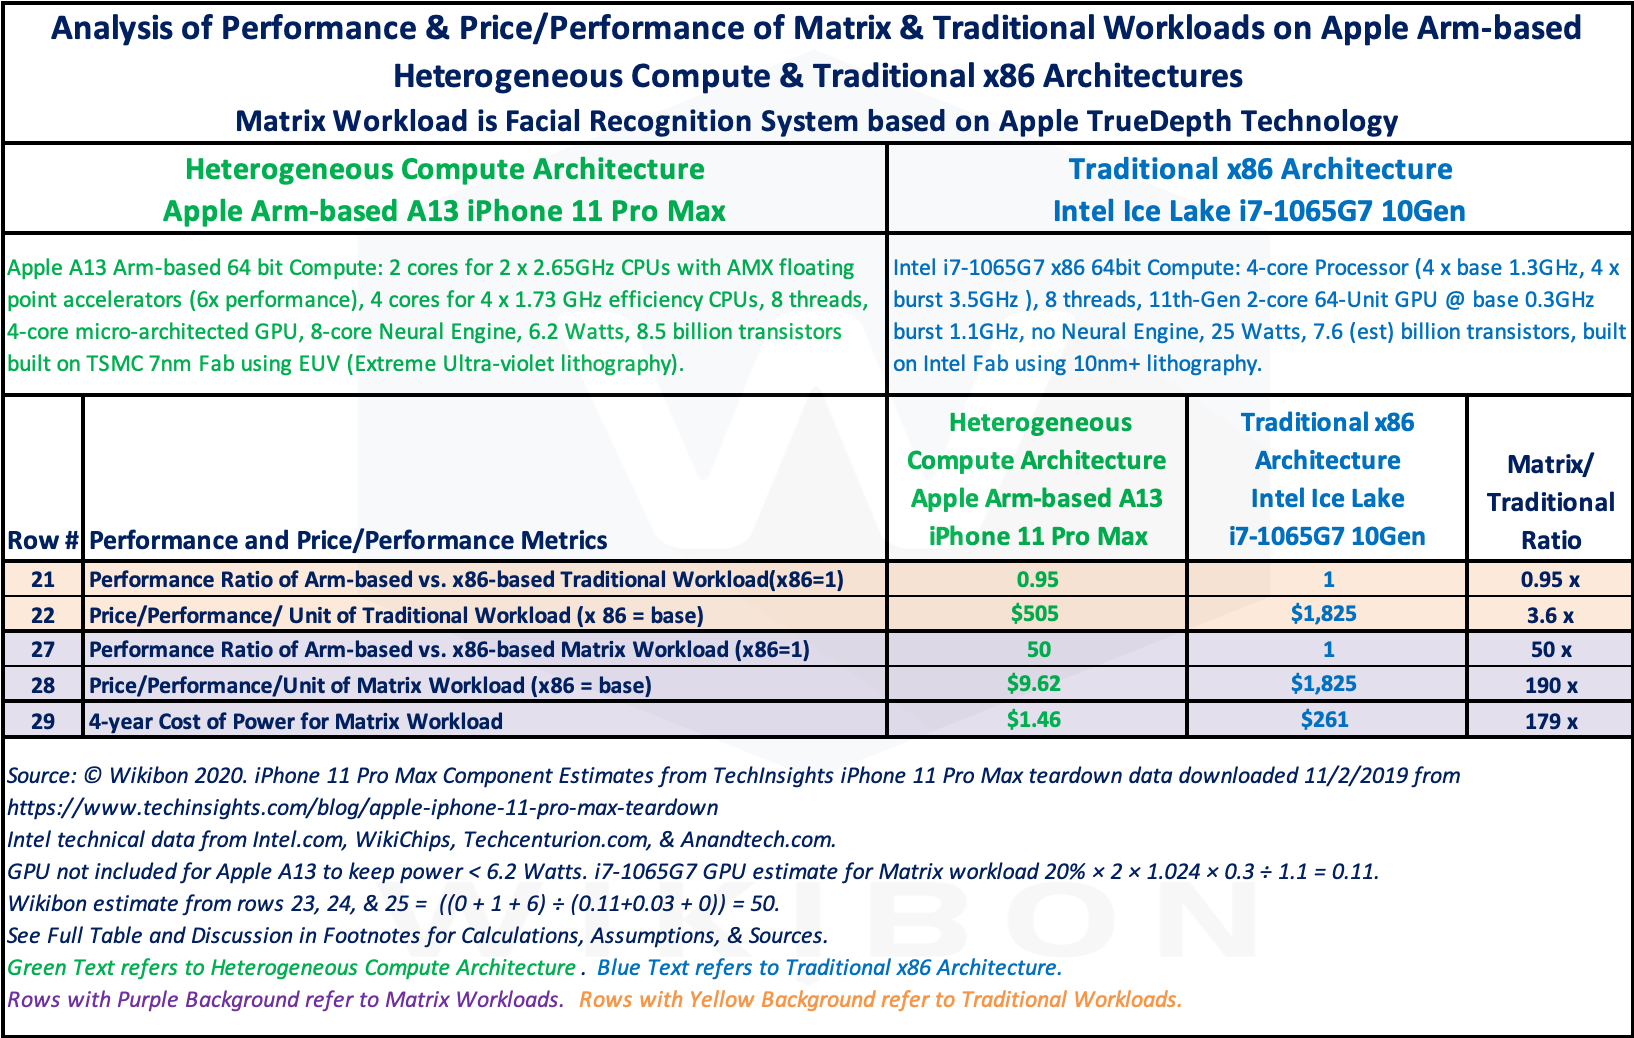 Summary Table - Traditional x86 vs. Apple Arm-based Heterogeneous Compute